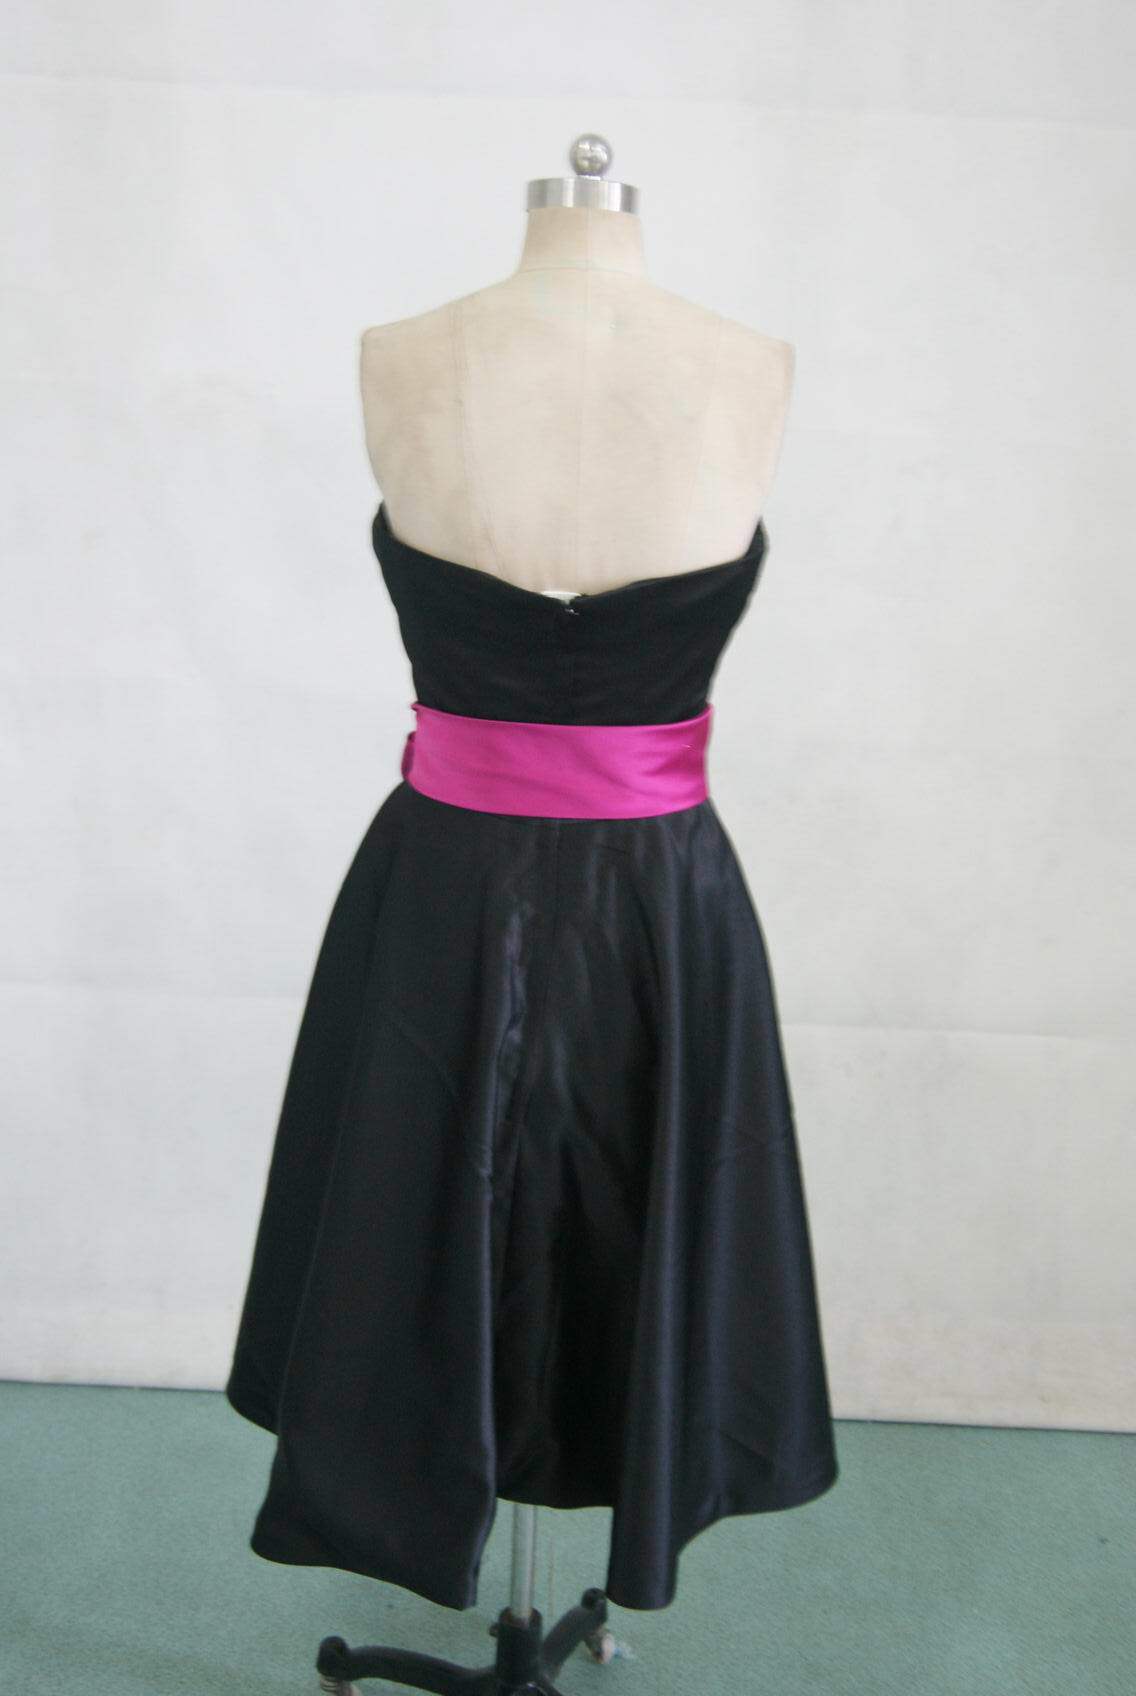 strapless short dress with fushia sash